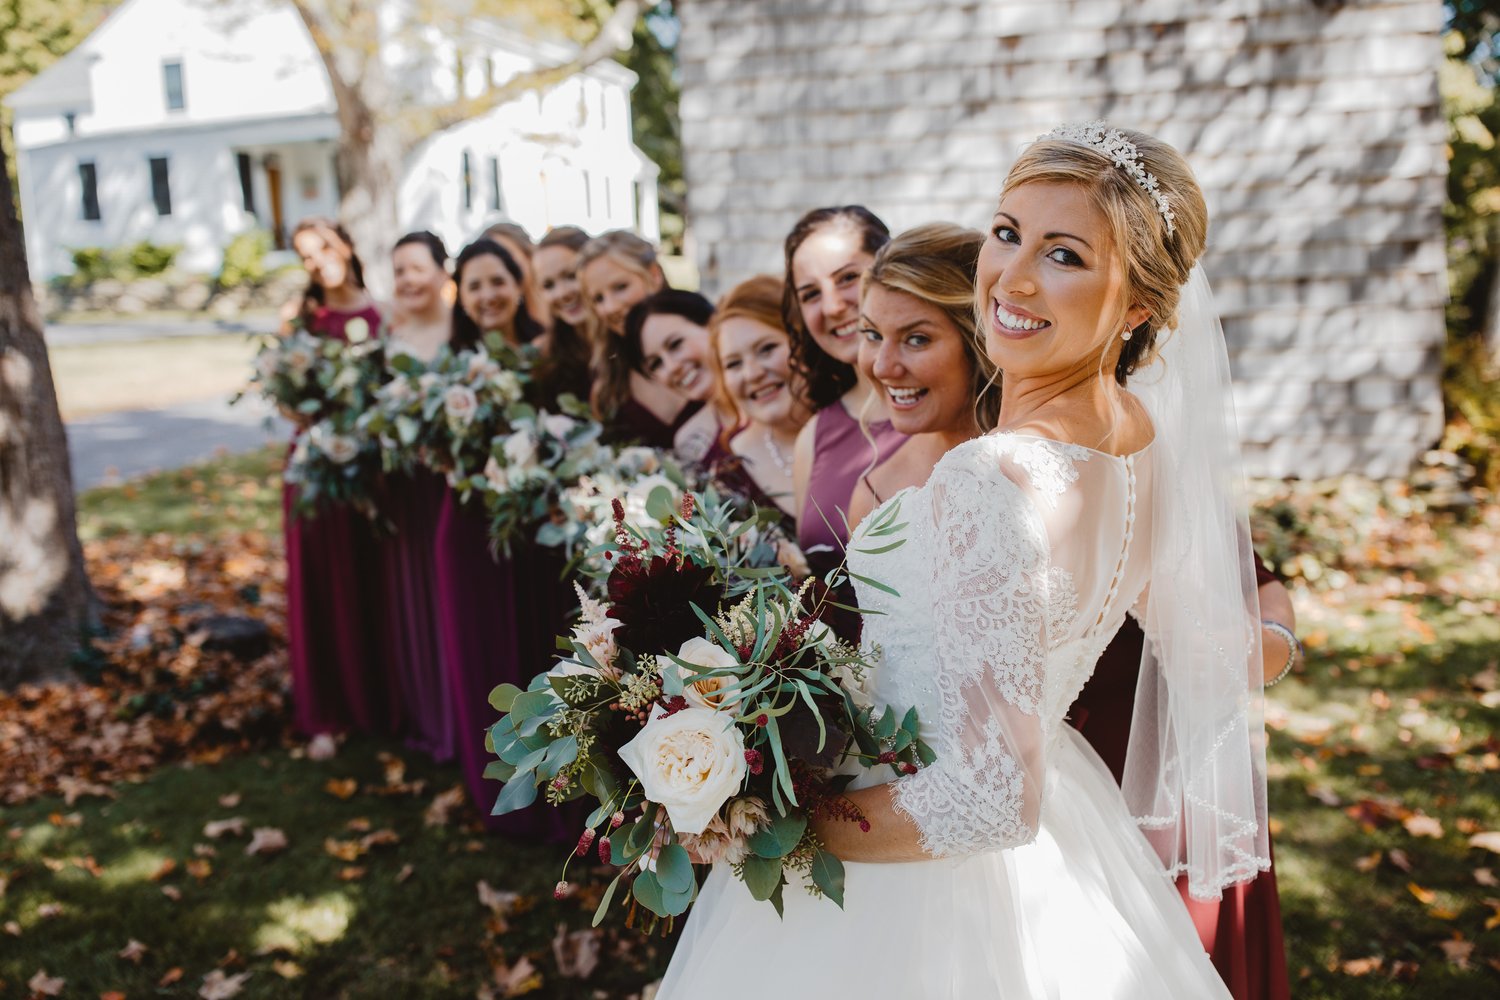 Bonk Photography - New Hampshire Wedding Photographer & Videographer